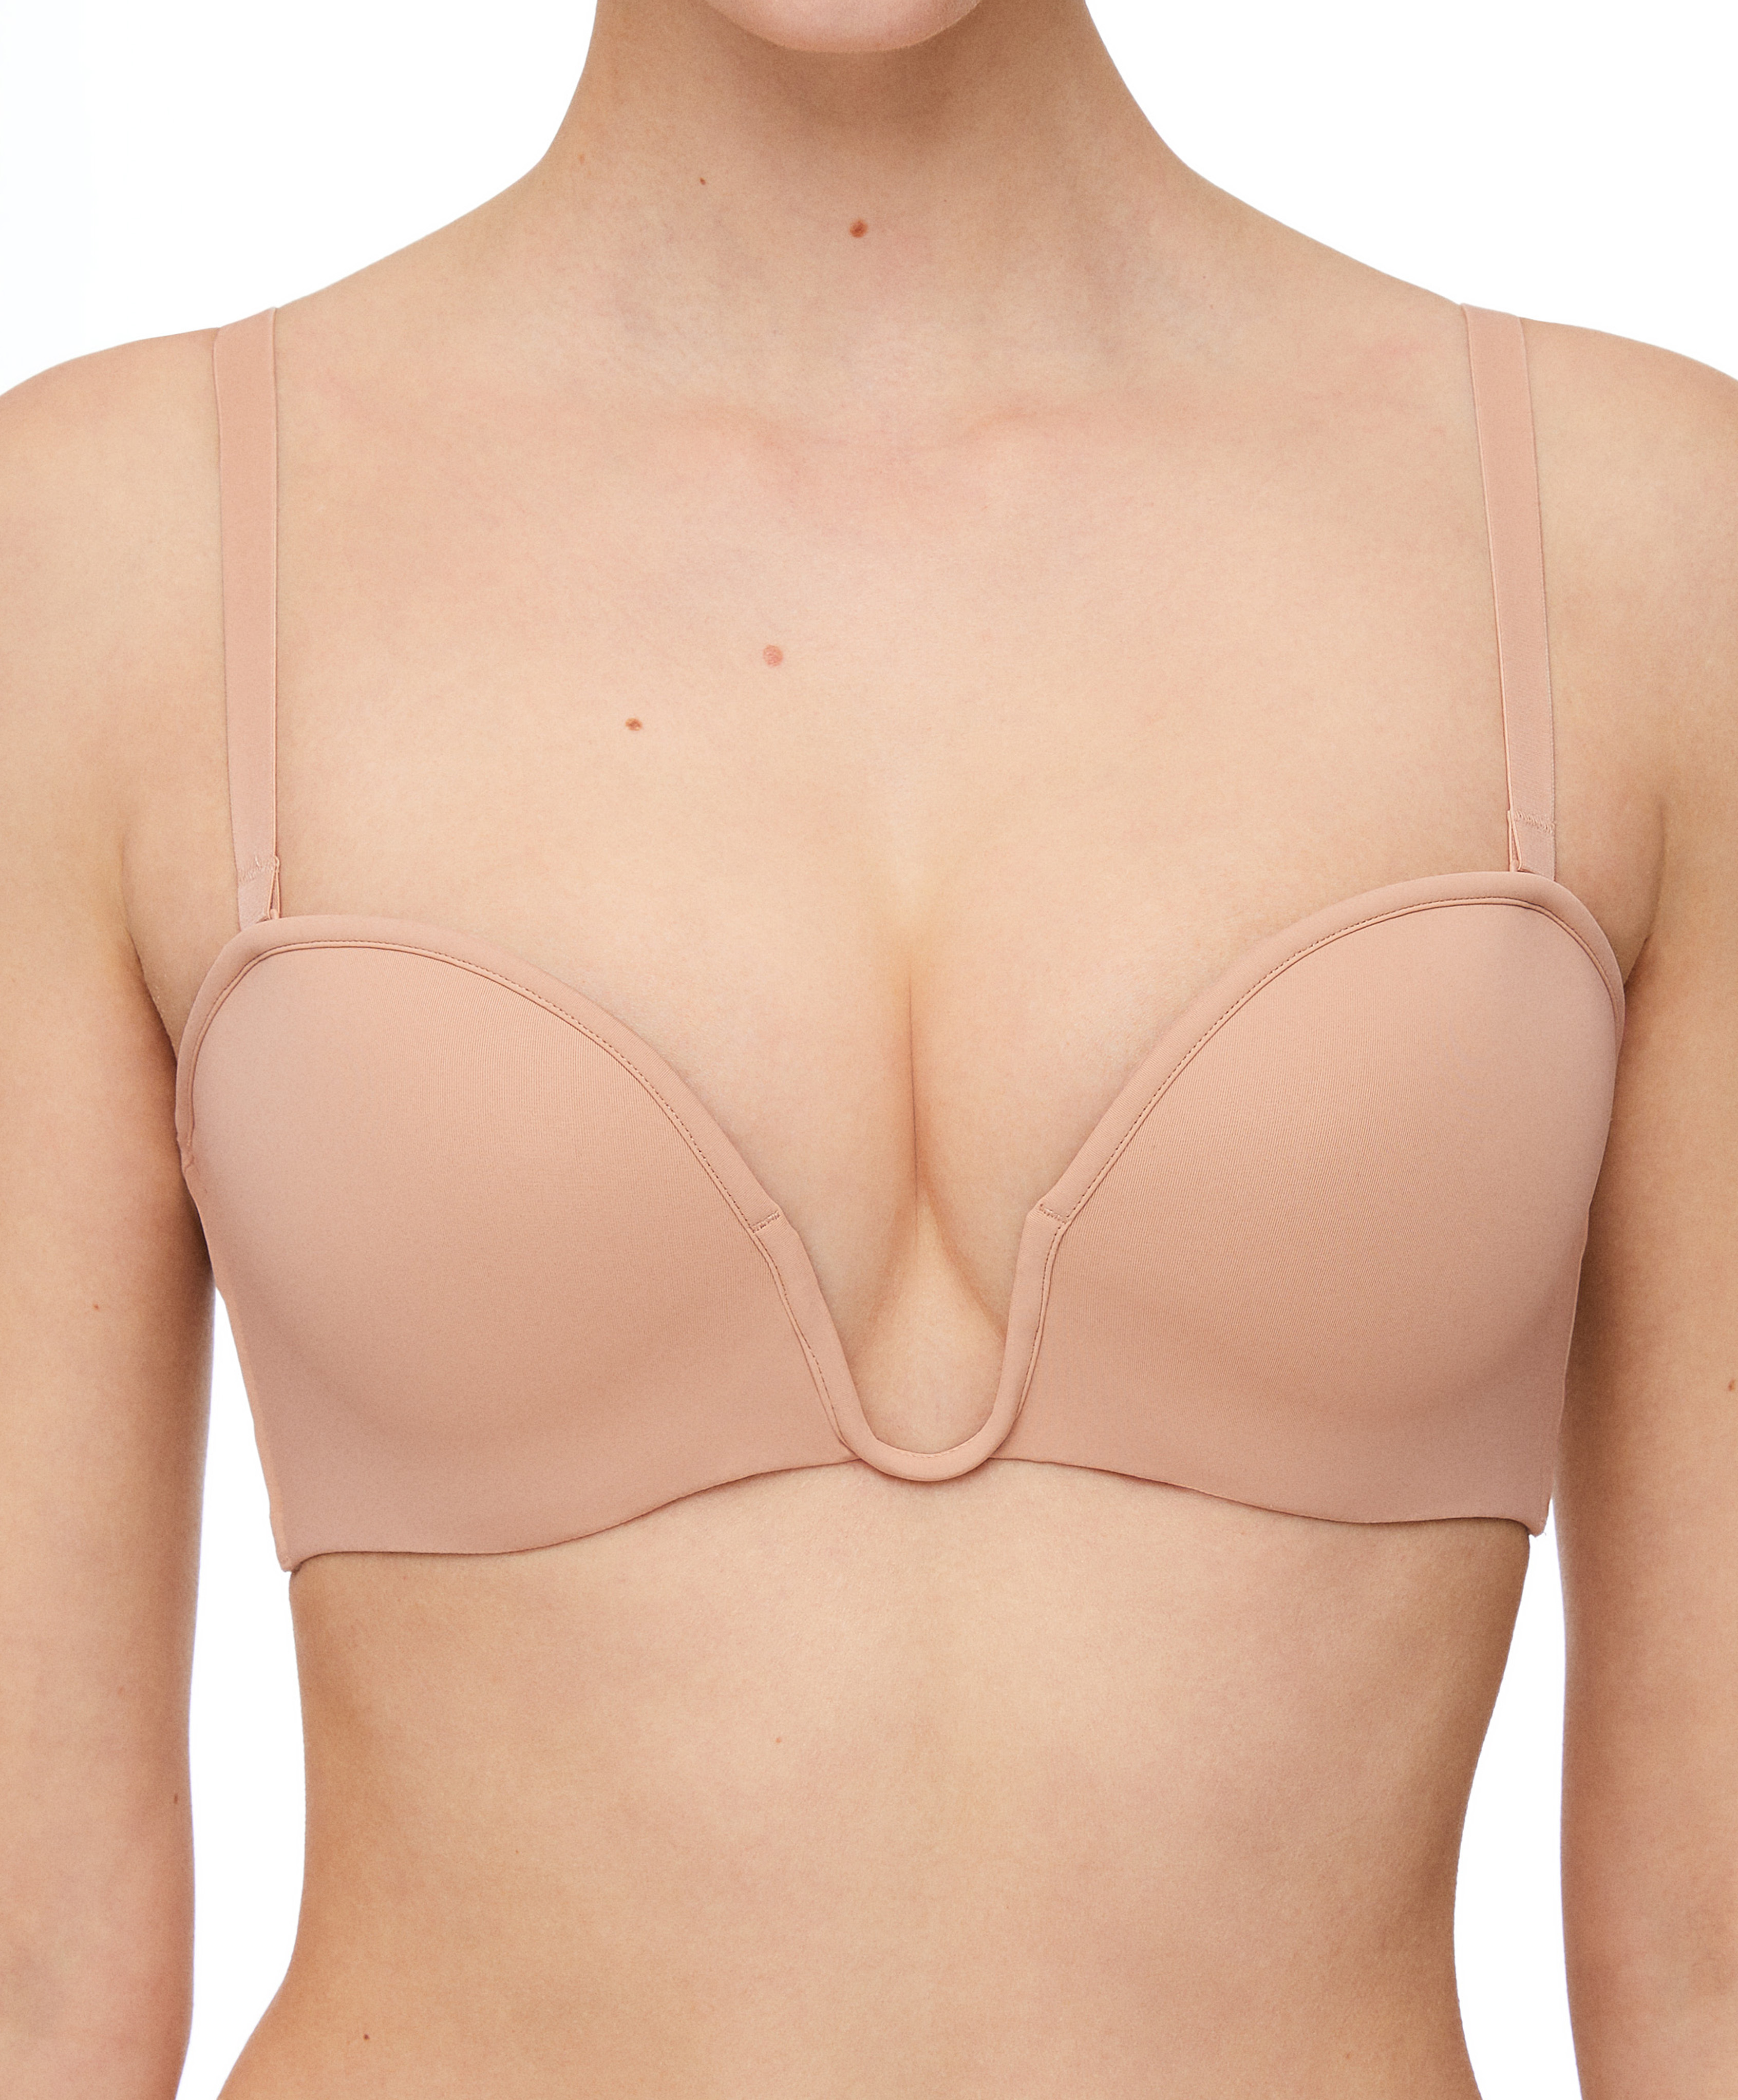 “U”-neck removable straps bra